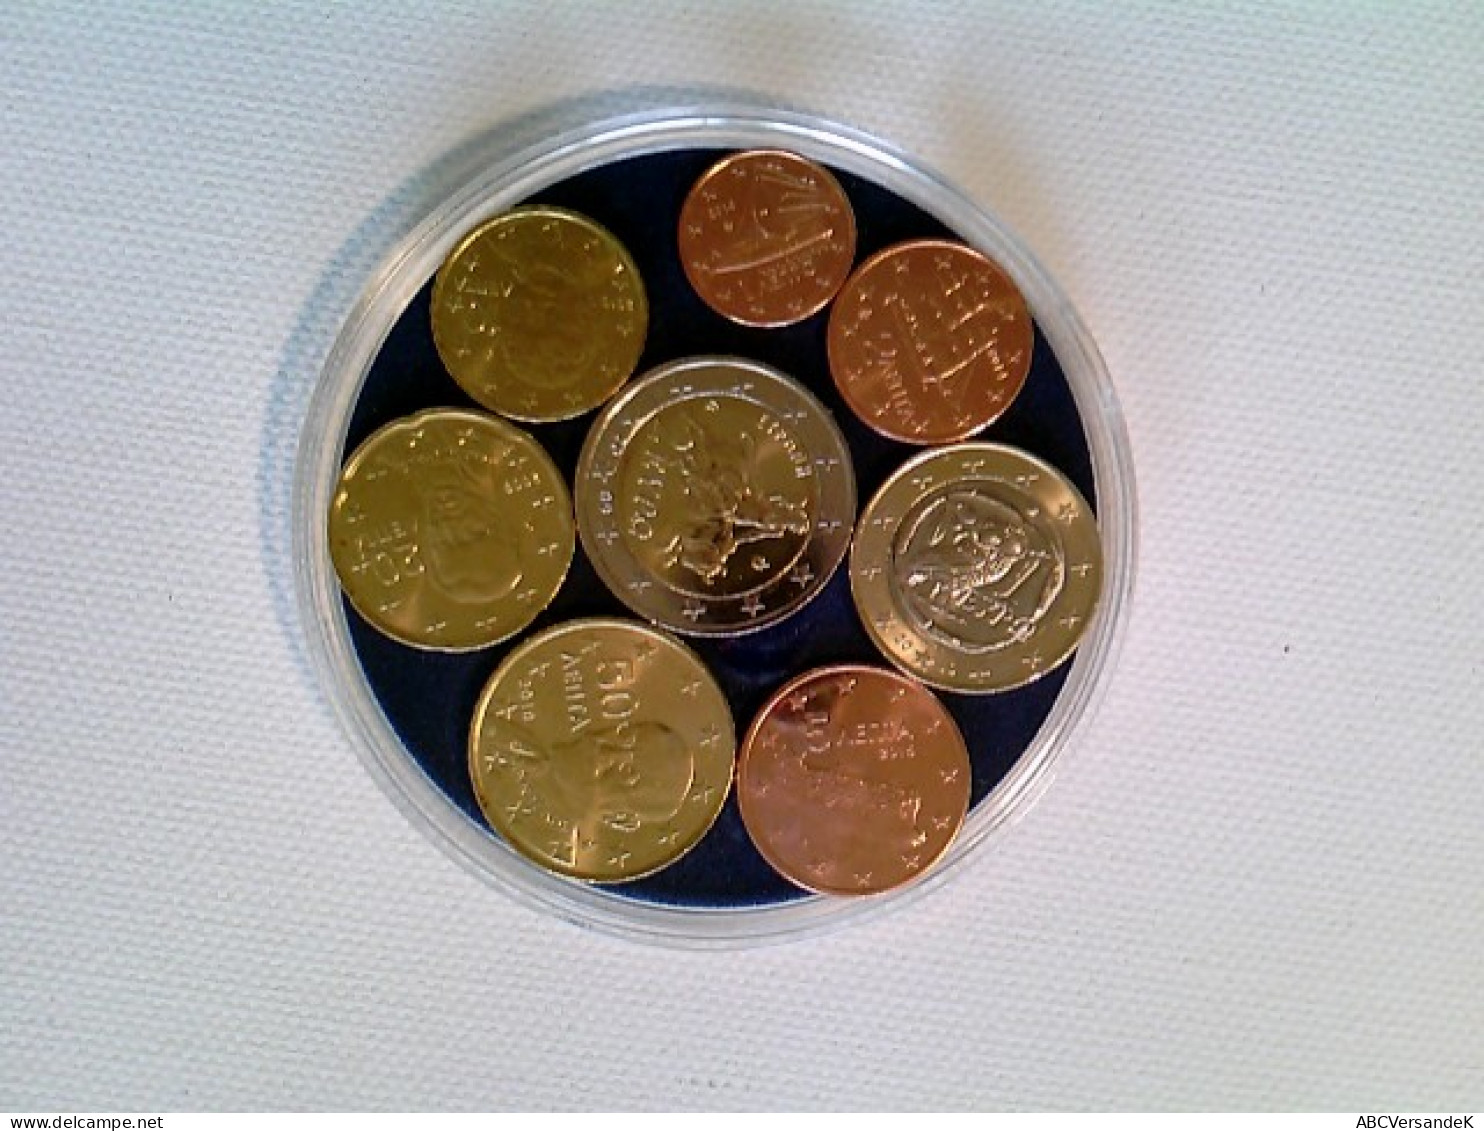 Münzen, Euro-Kursmünzensatz Griechenland, Runde Kapsel - Numismatik